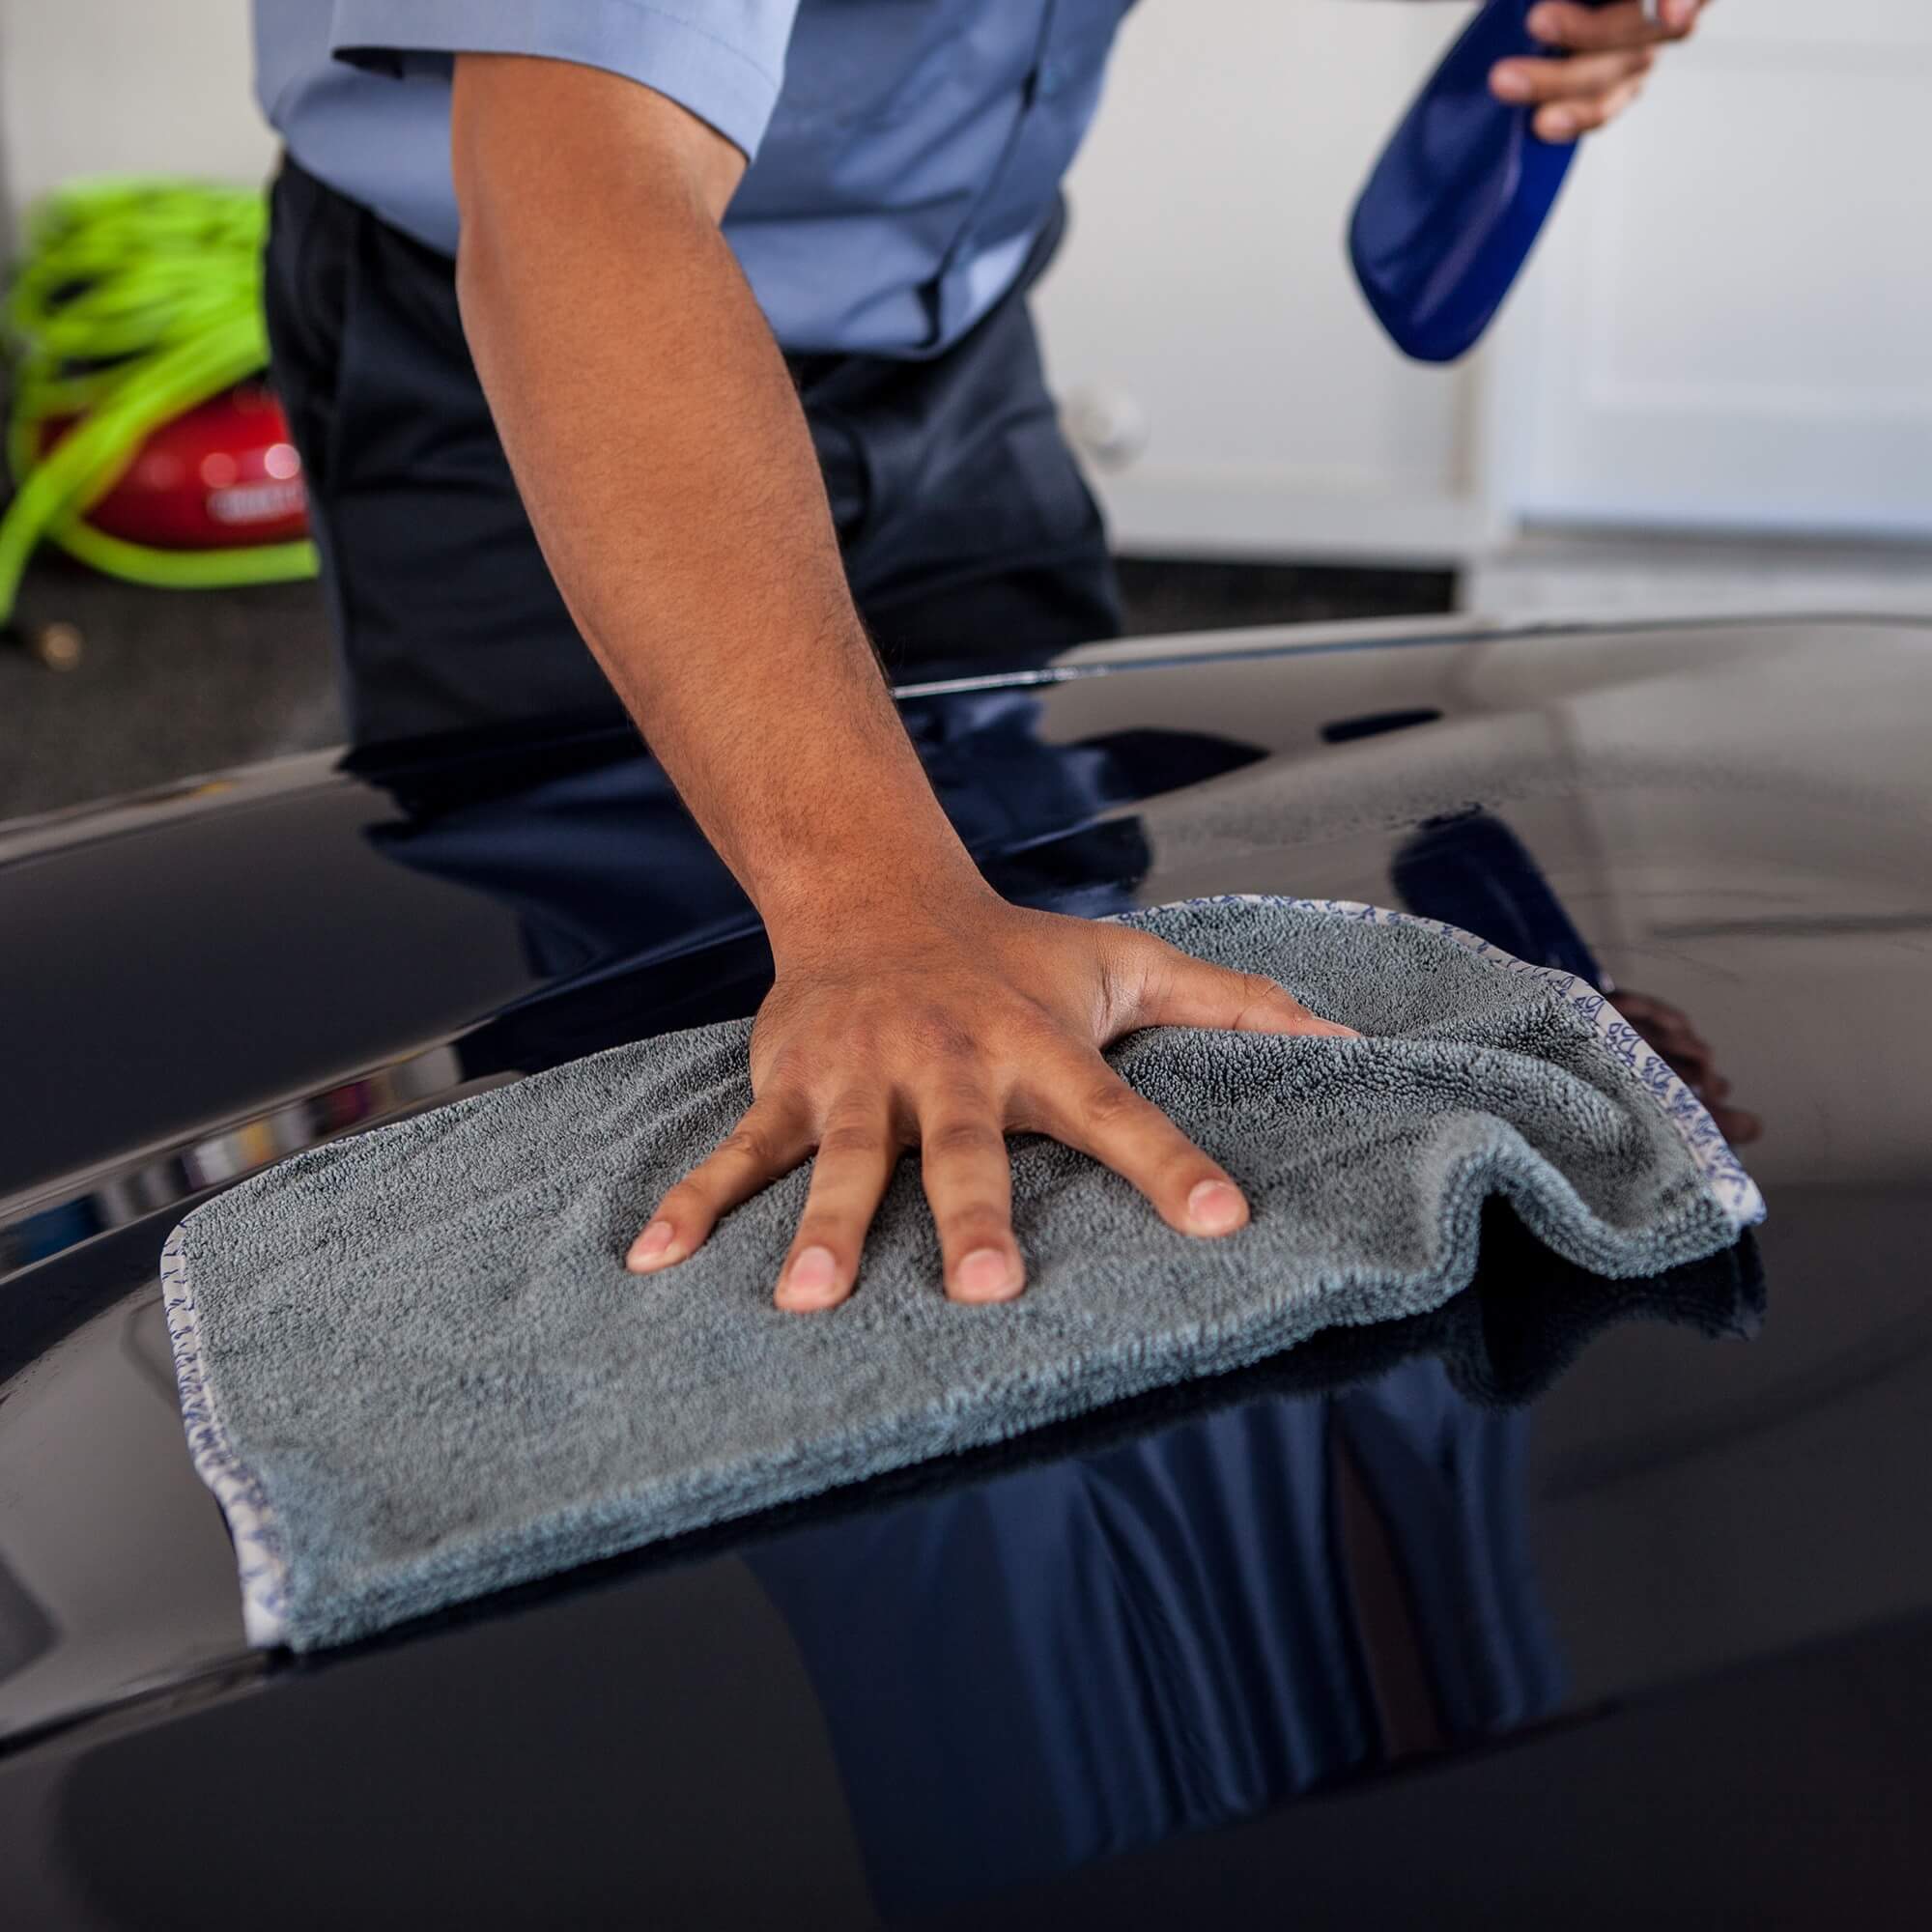 Microfiber Drying Towel For Cars